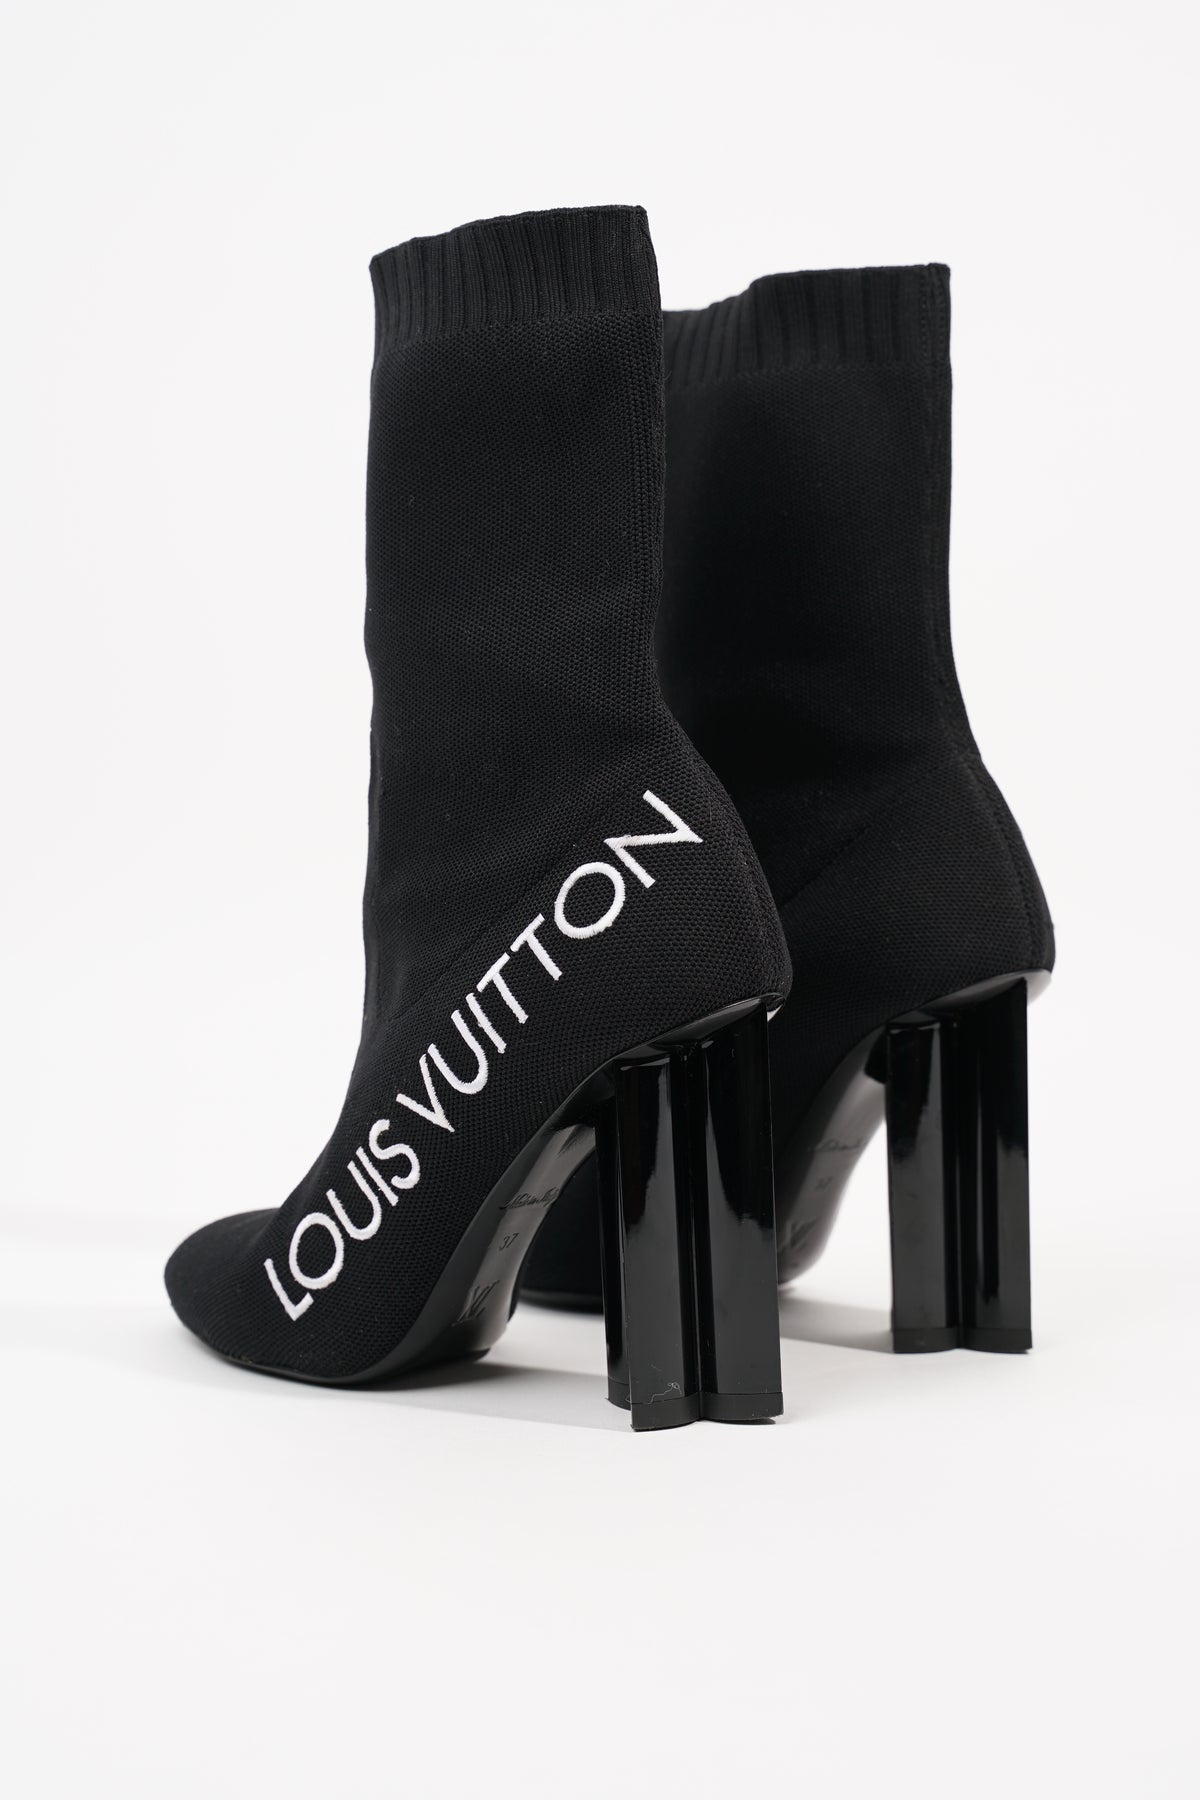 Silhouette ankle boots Louis Vuitton Black size 38.5 EU in Plastic